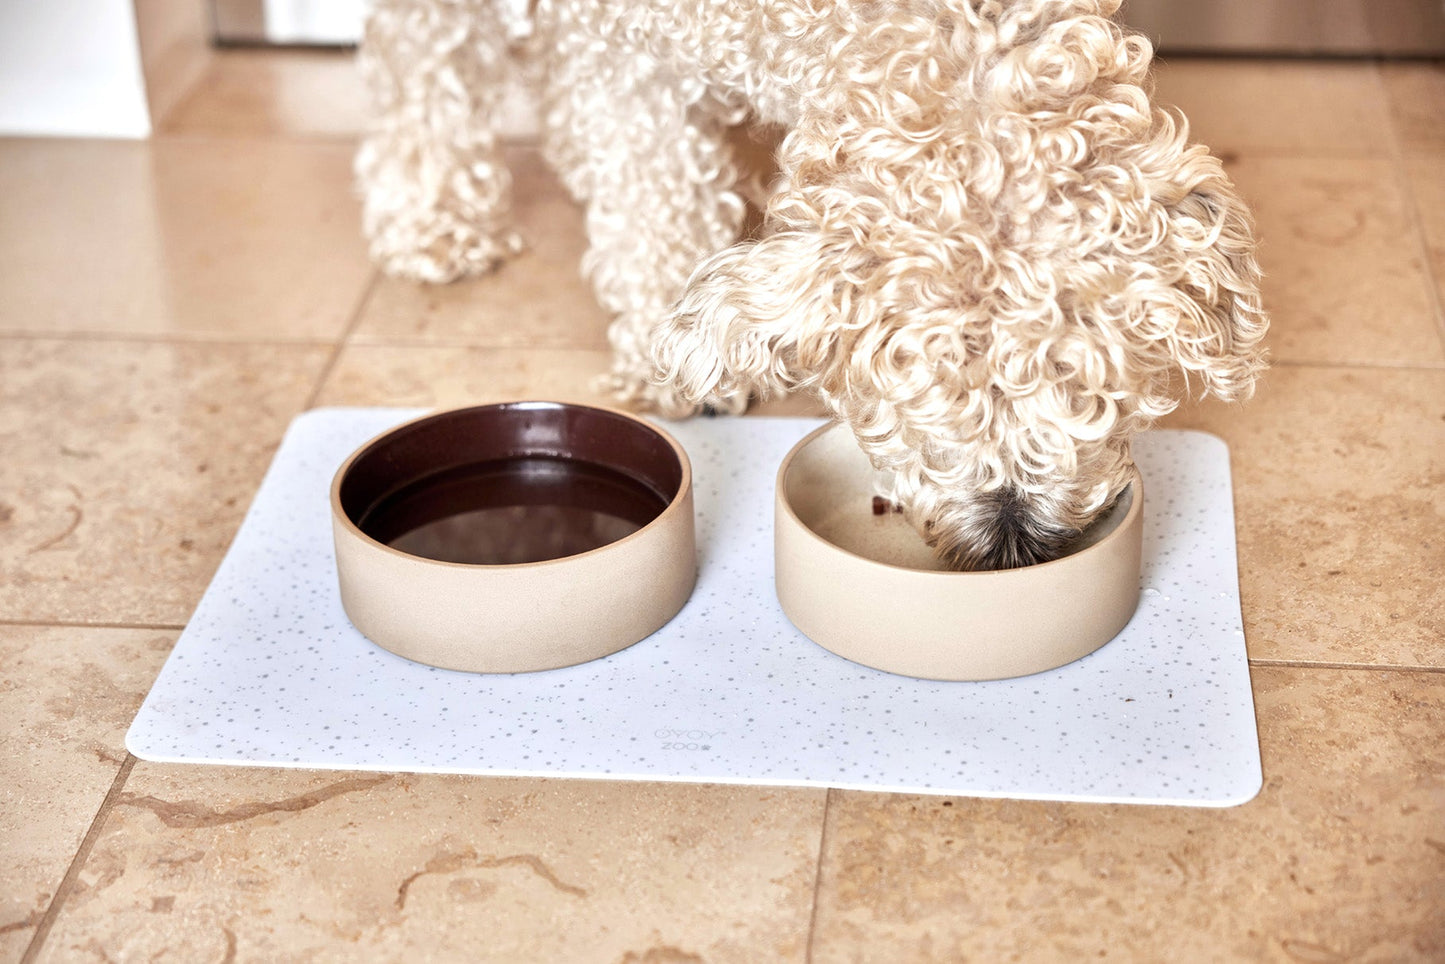 OYOY ZOO Sia Dog Bowl - Medium Dog Dinner